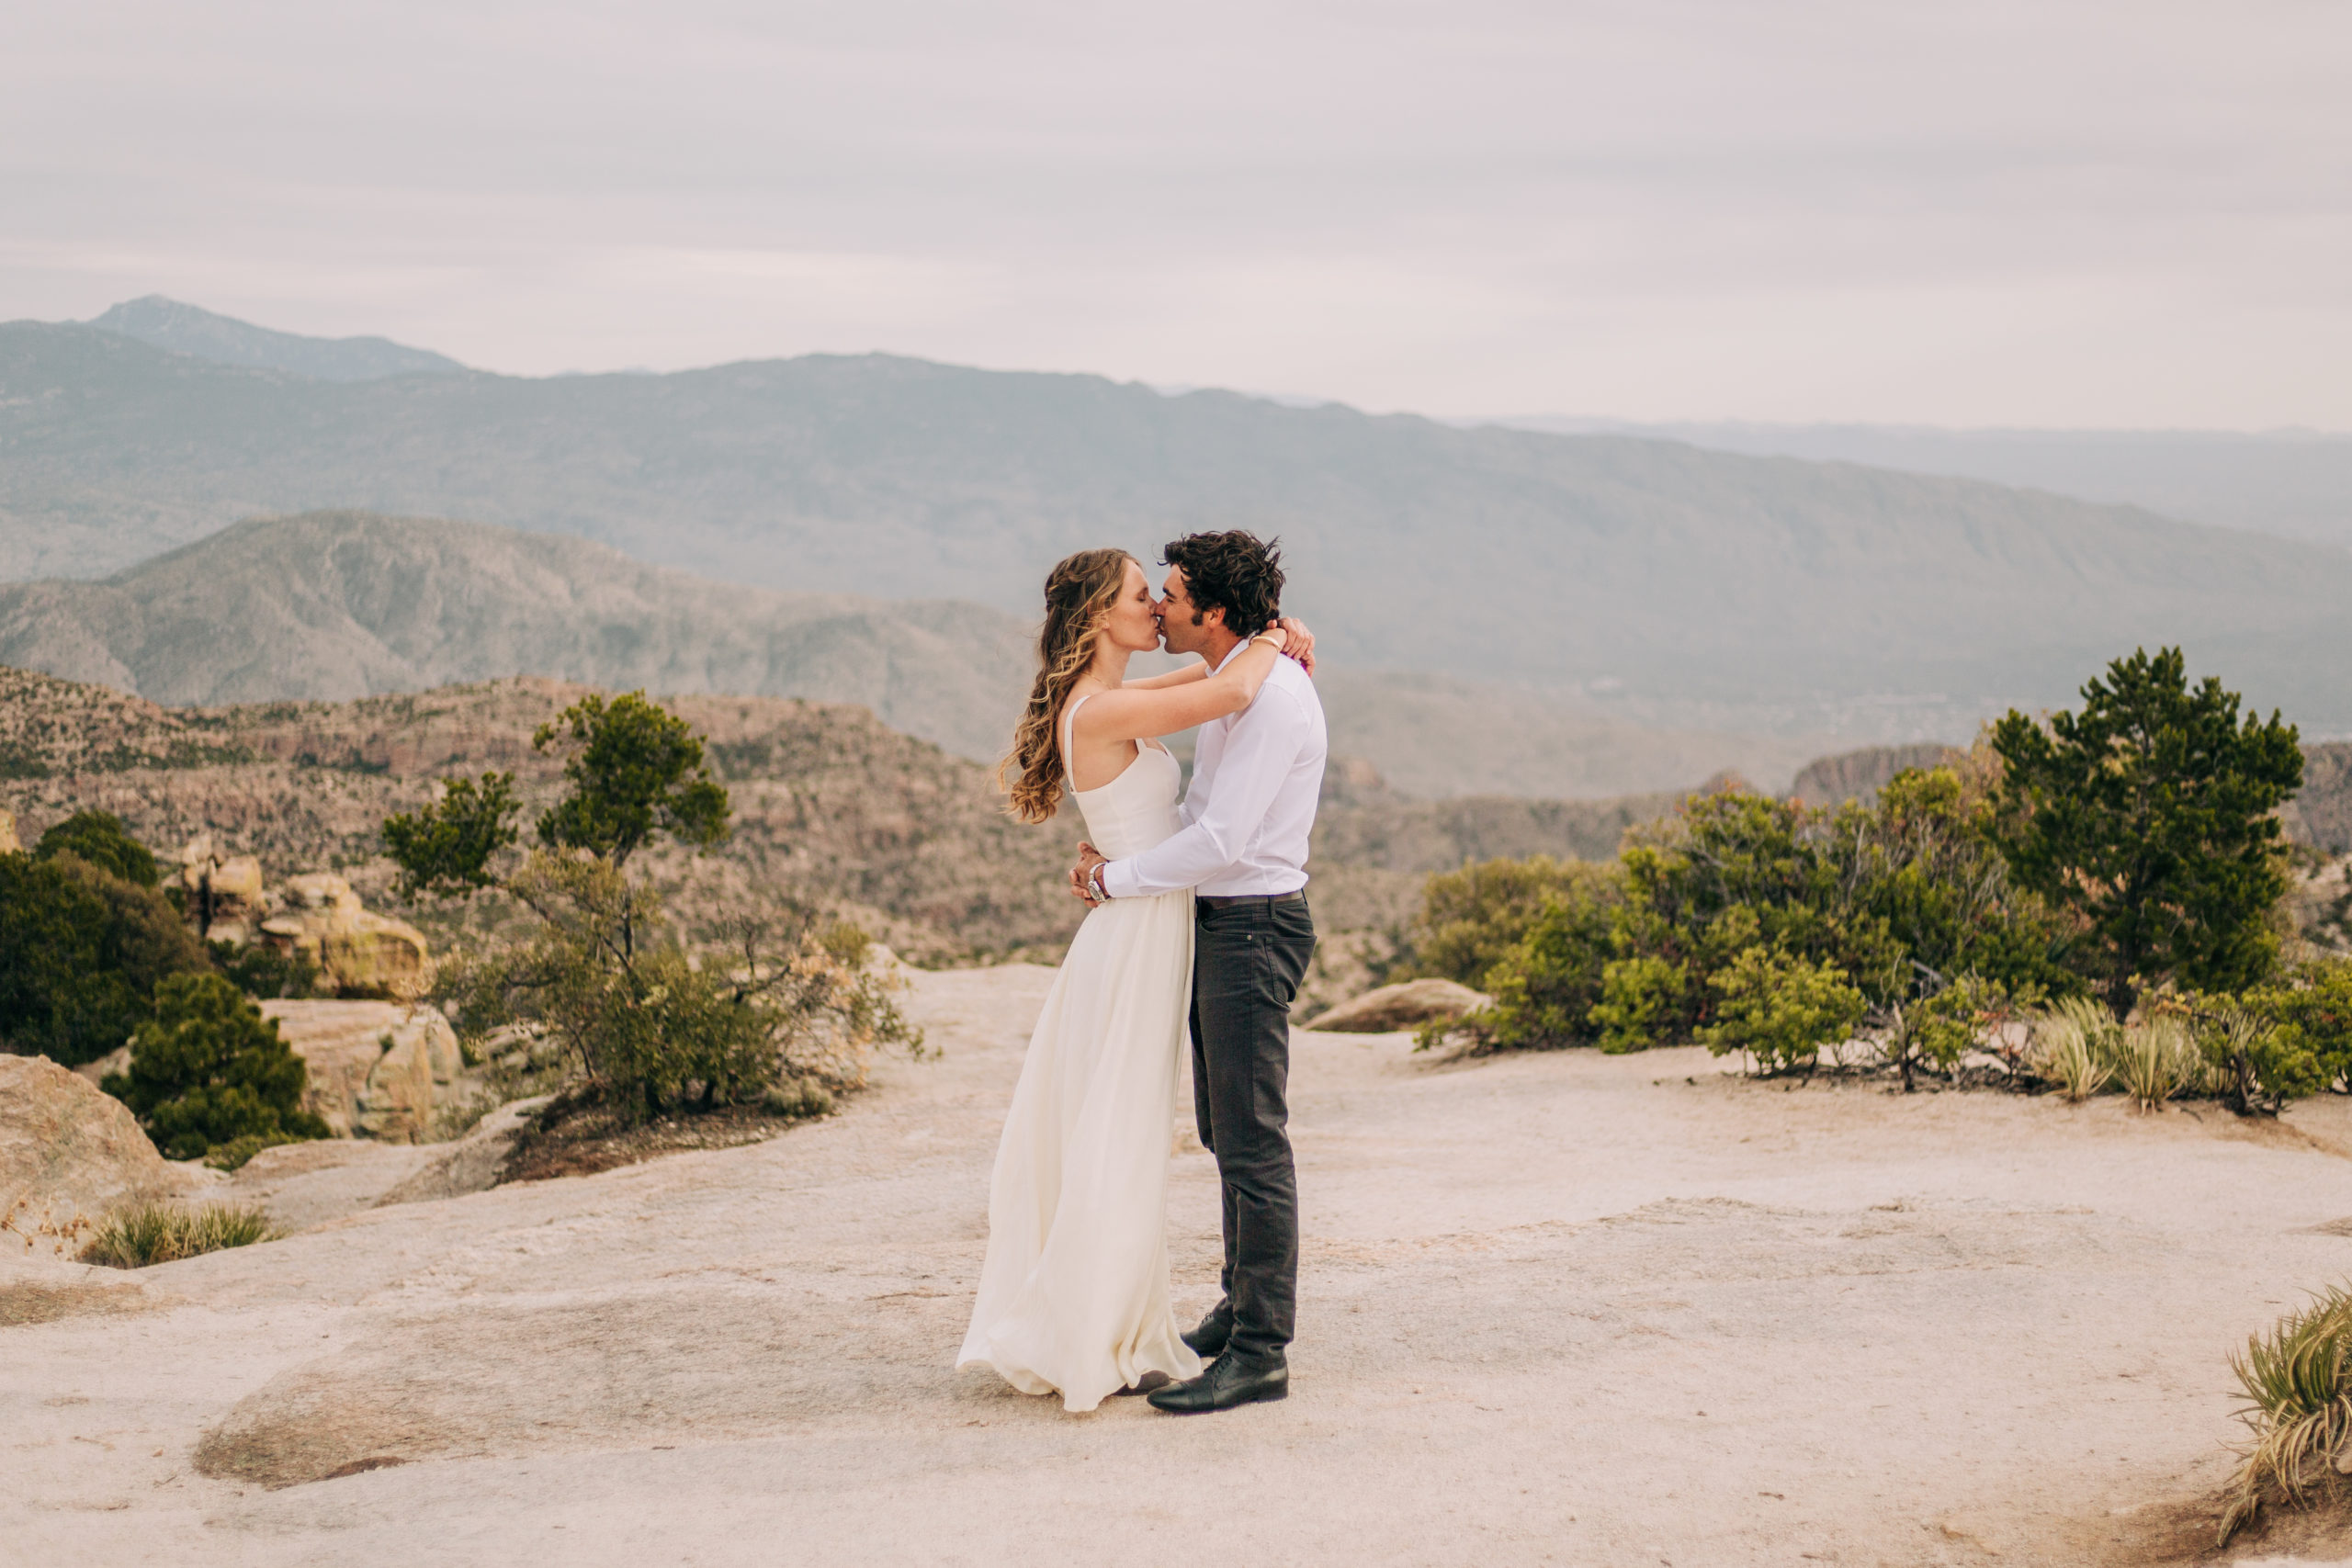 Windy-Point-Elopement—Mount-Lemmon-Elopement—Tucson-Elopement-Photographer—Tucson-Wedding-Photographer—Mount-Lemmon-Wedding—Adventure-Elopement—Bride-And-Groom—Mountain-Scenery—Portraits—Embrace—